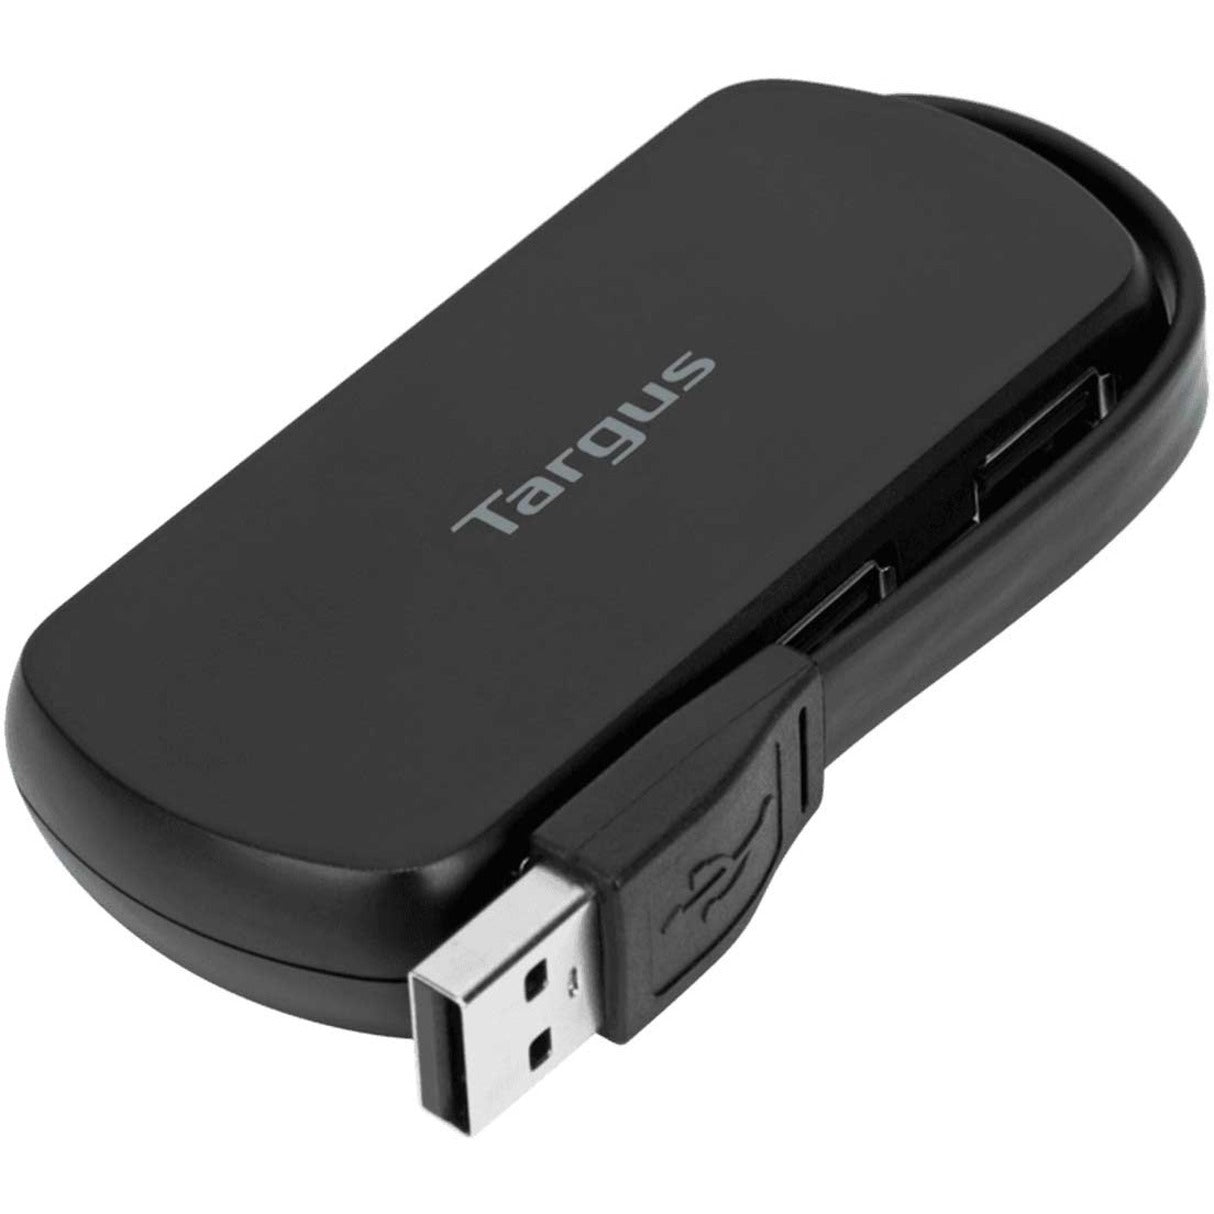 Targus ACH114US 4-Port USB Hub, USB Type A, 1 Year Warranty, RoHS Certified